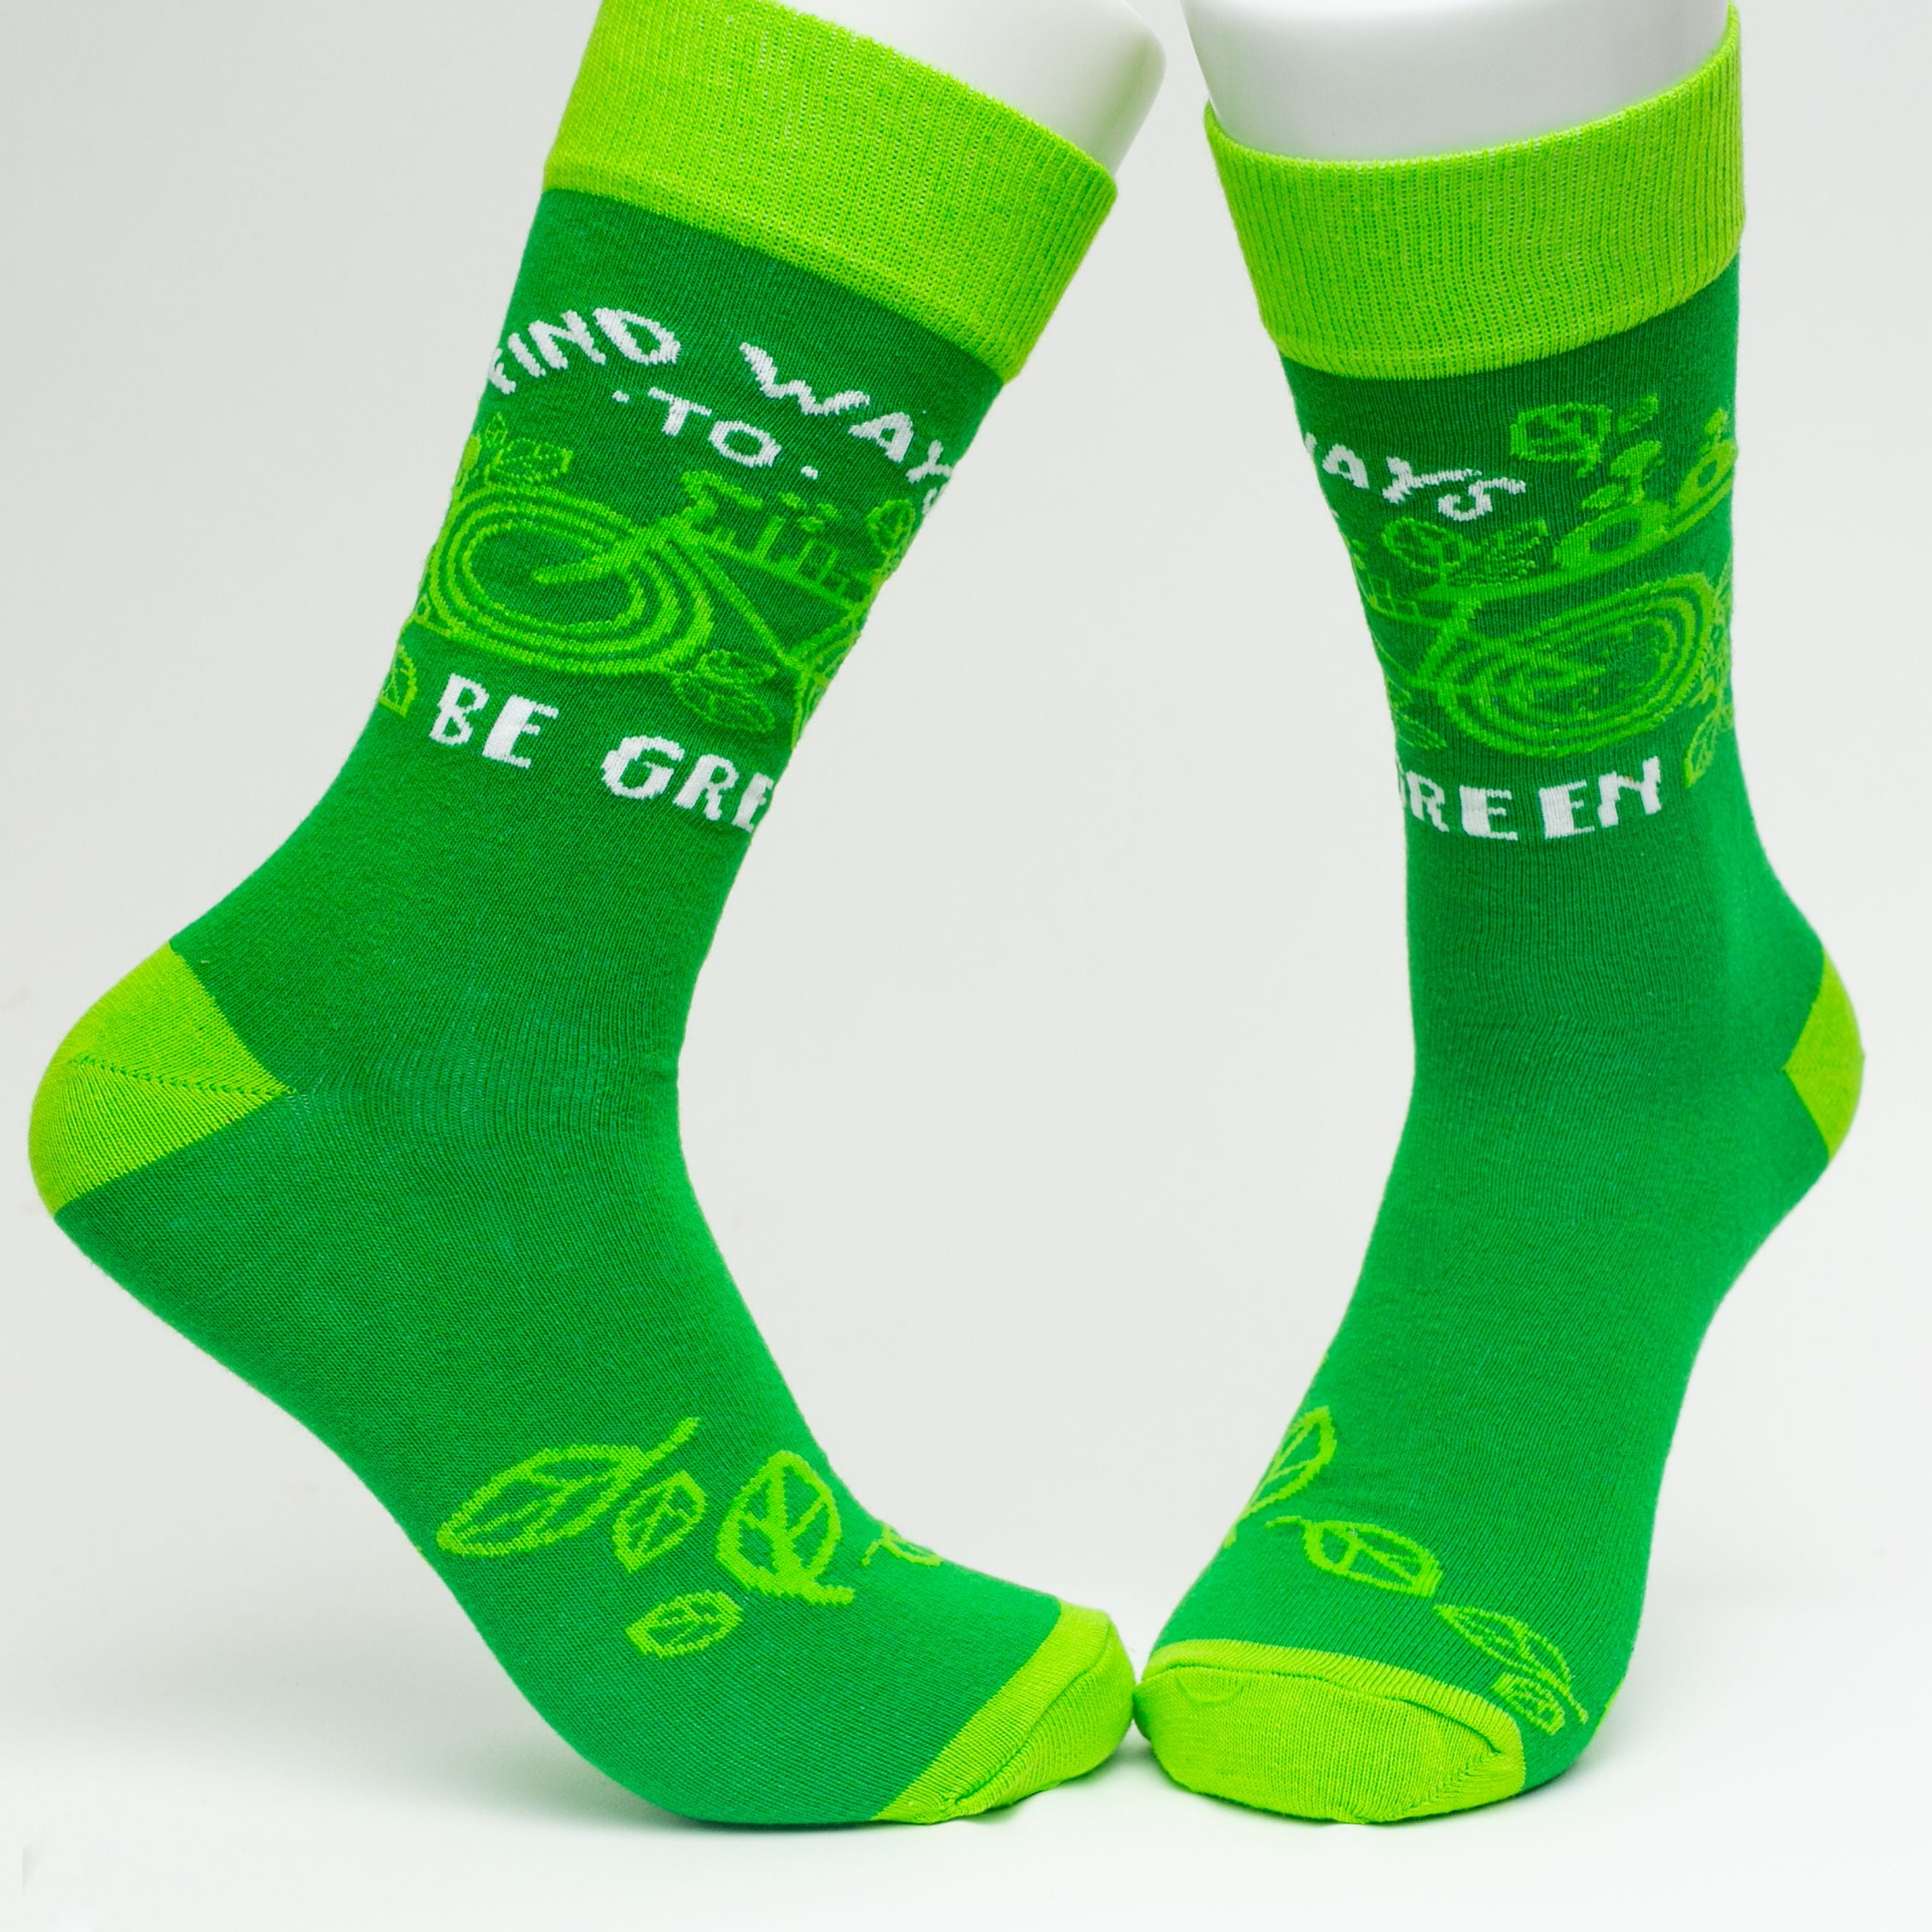 Beautifica Unisex Socks - Green Data Small